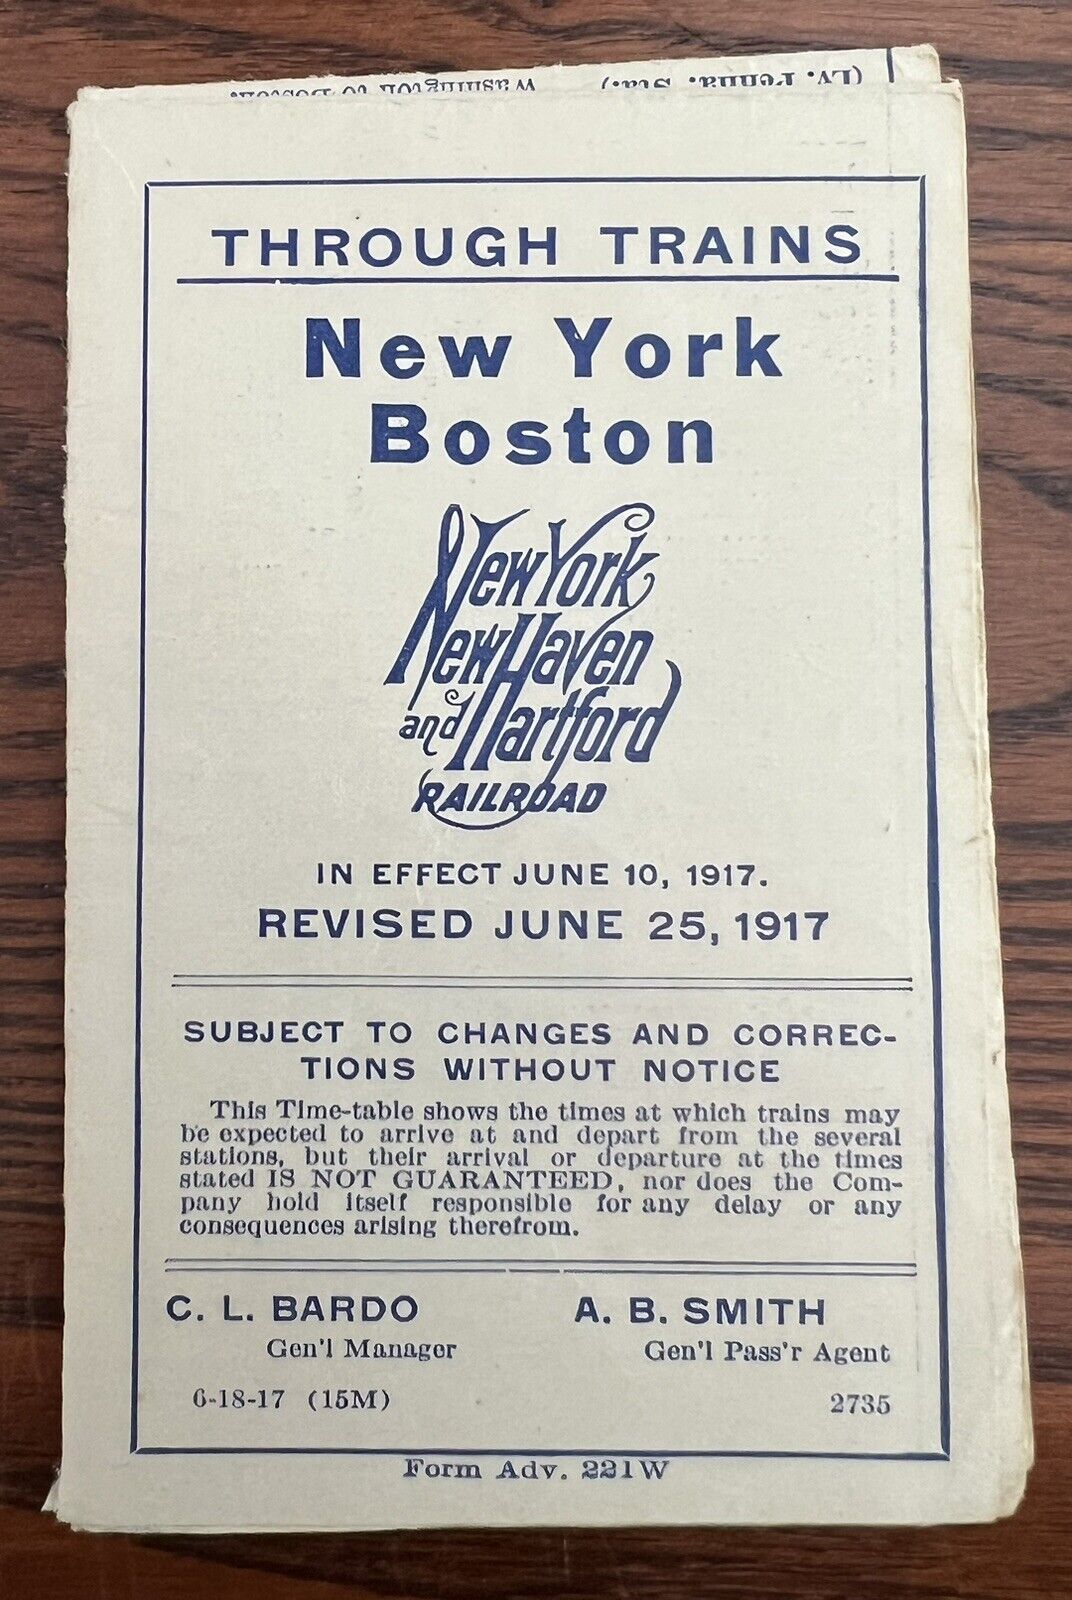 NYNH&H RAILROAD 1917 POCKET TIMETABLE